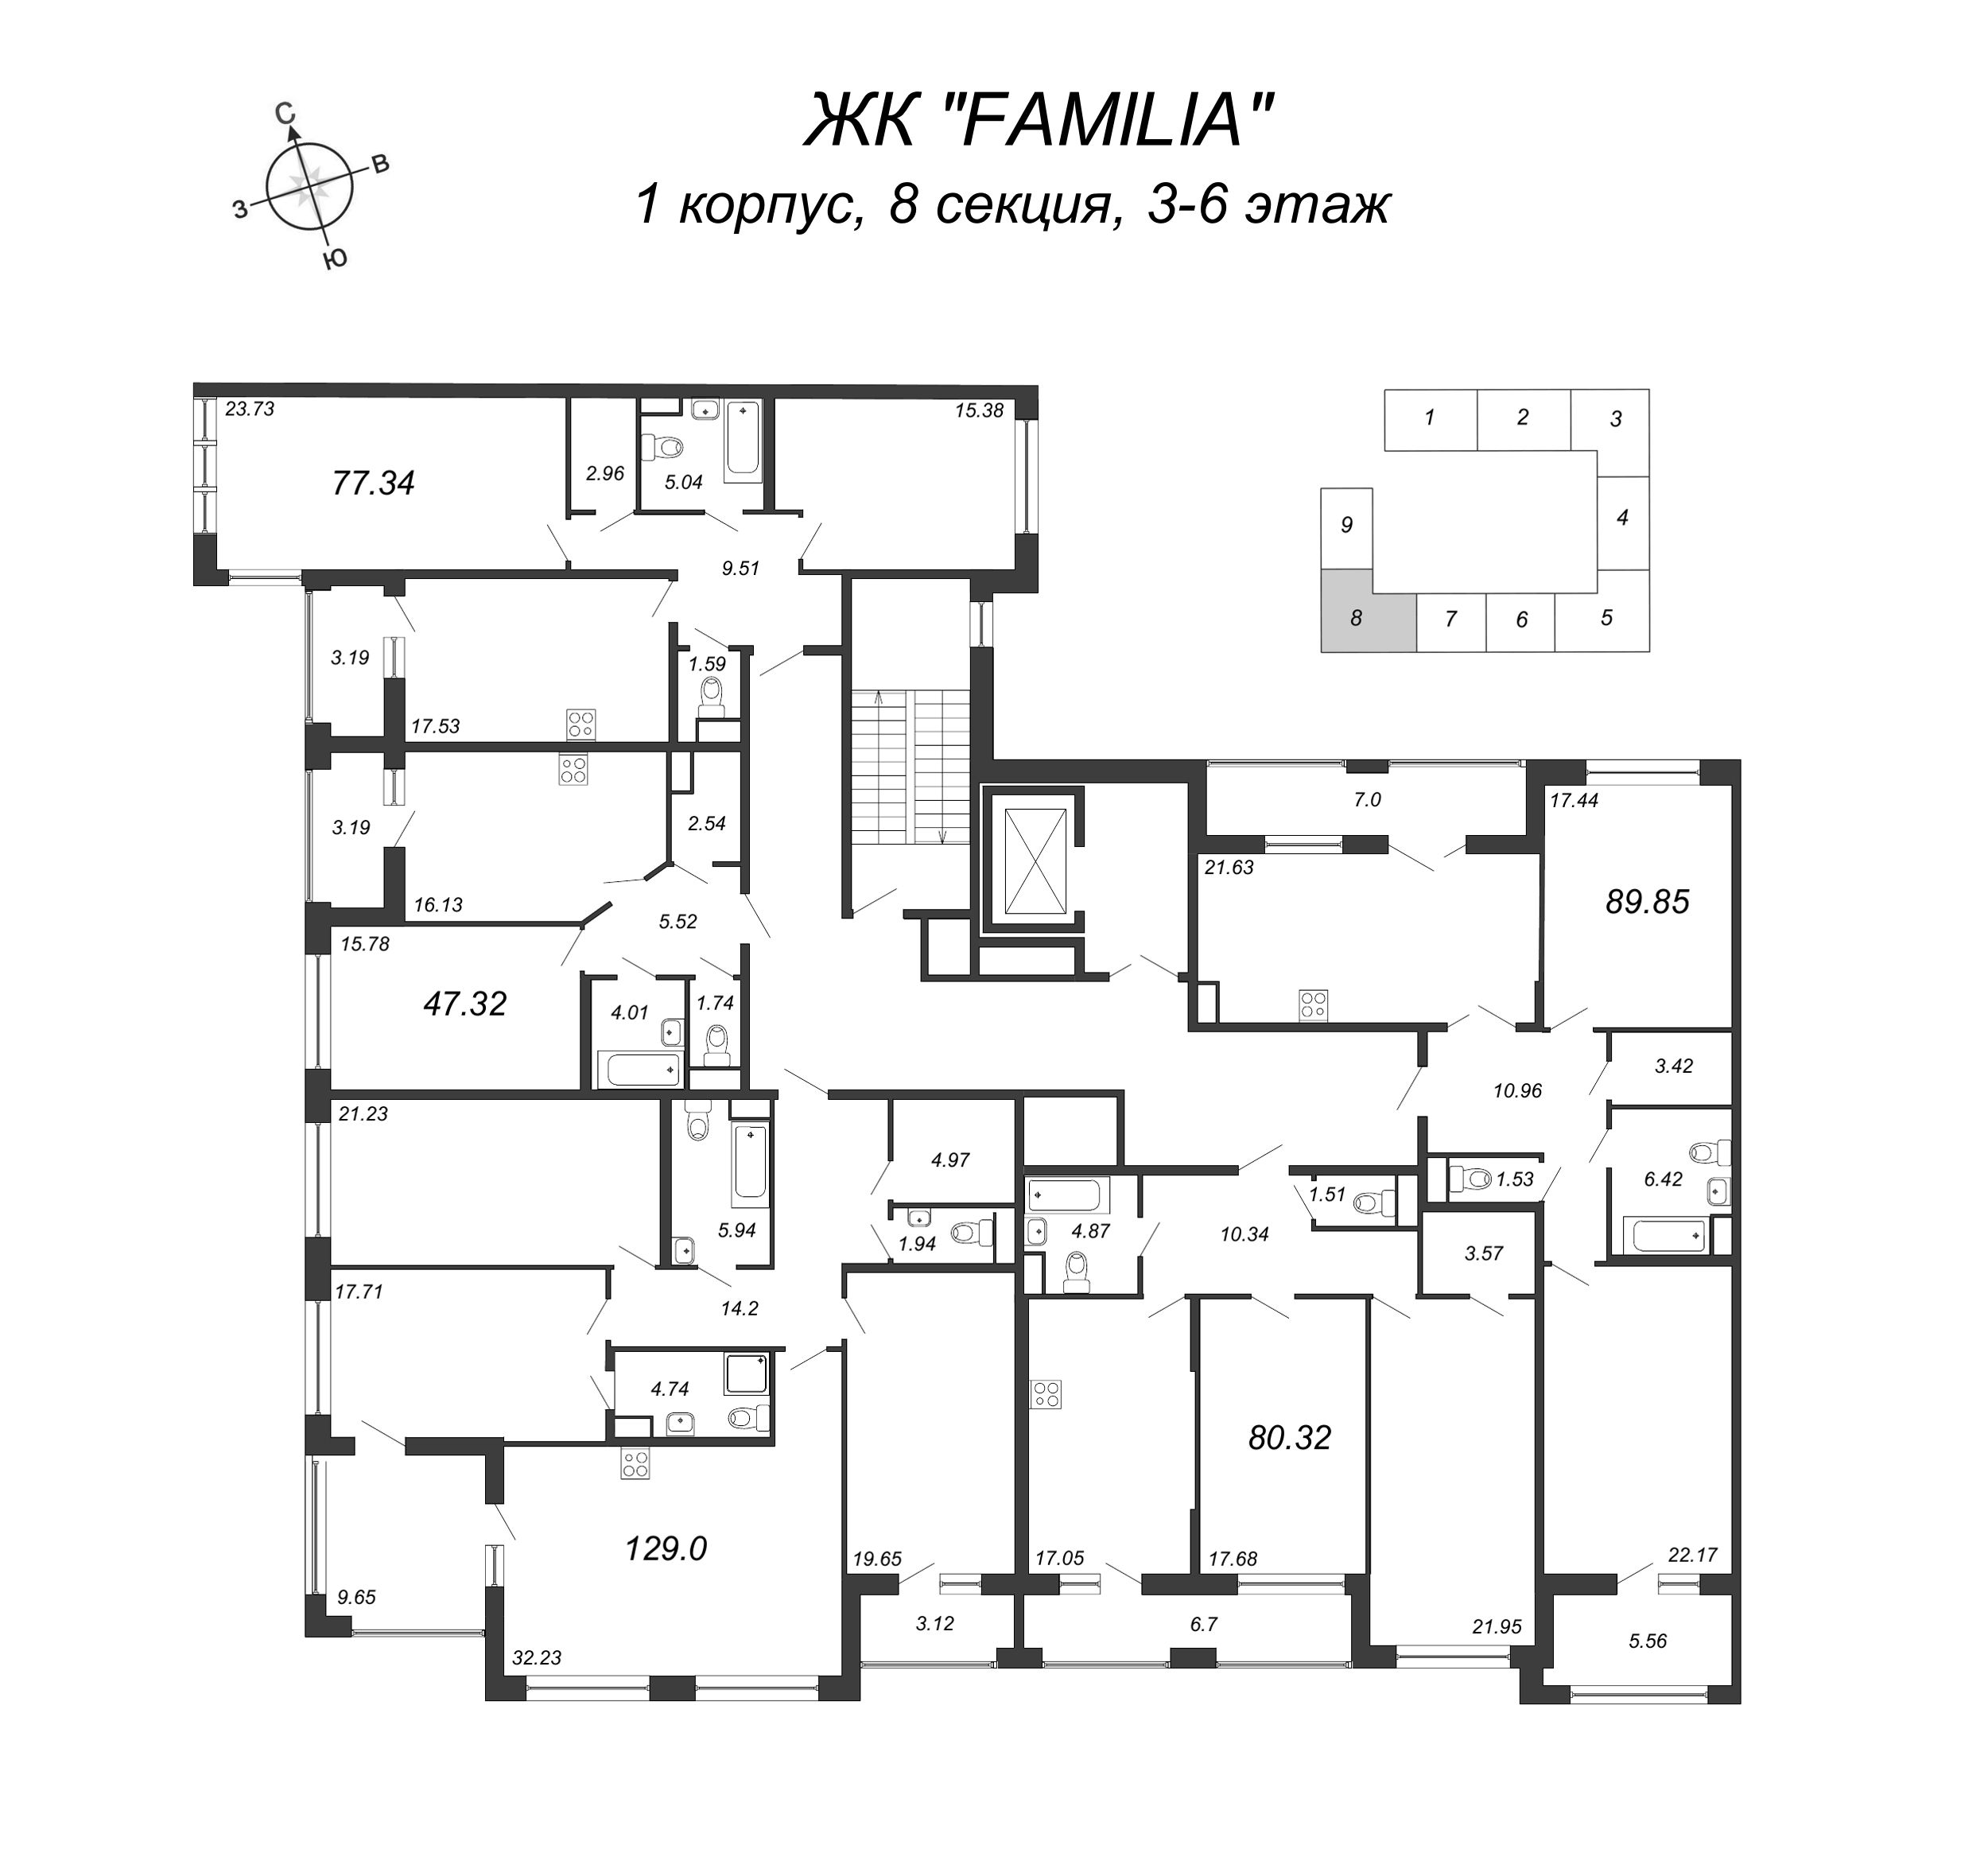 4-комнатная (Евро) квартира, 129.2 м² - планировка этажа